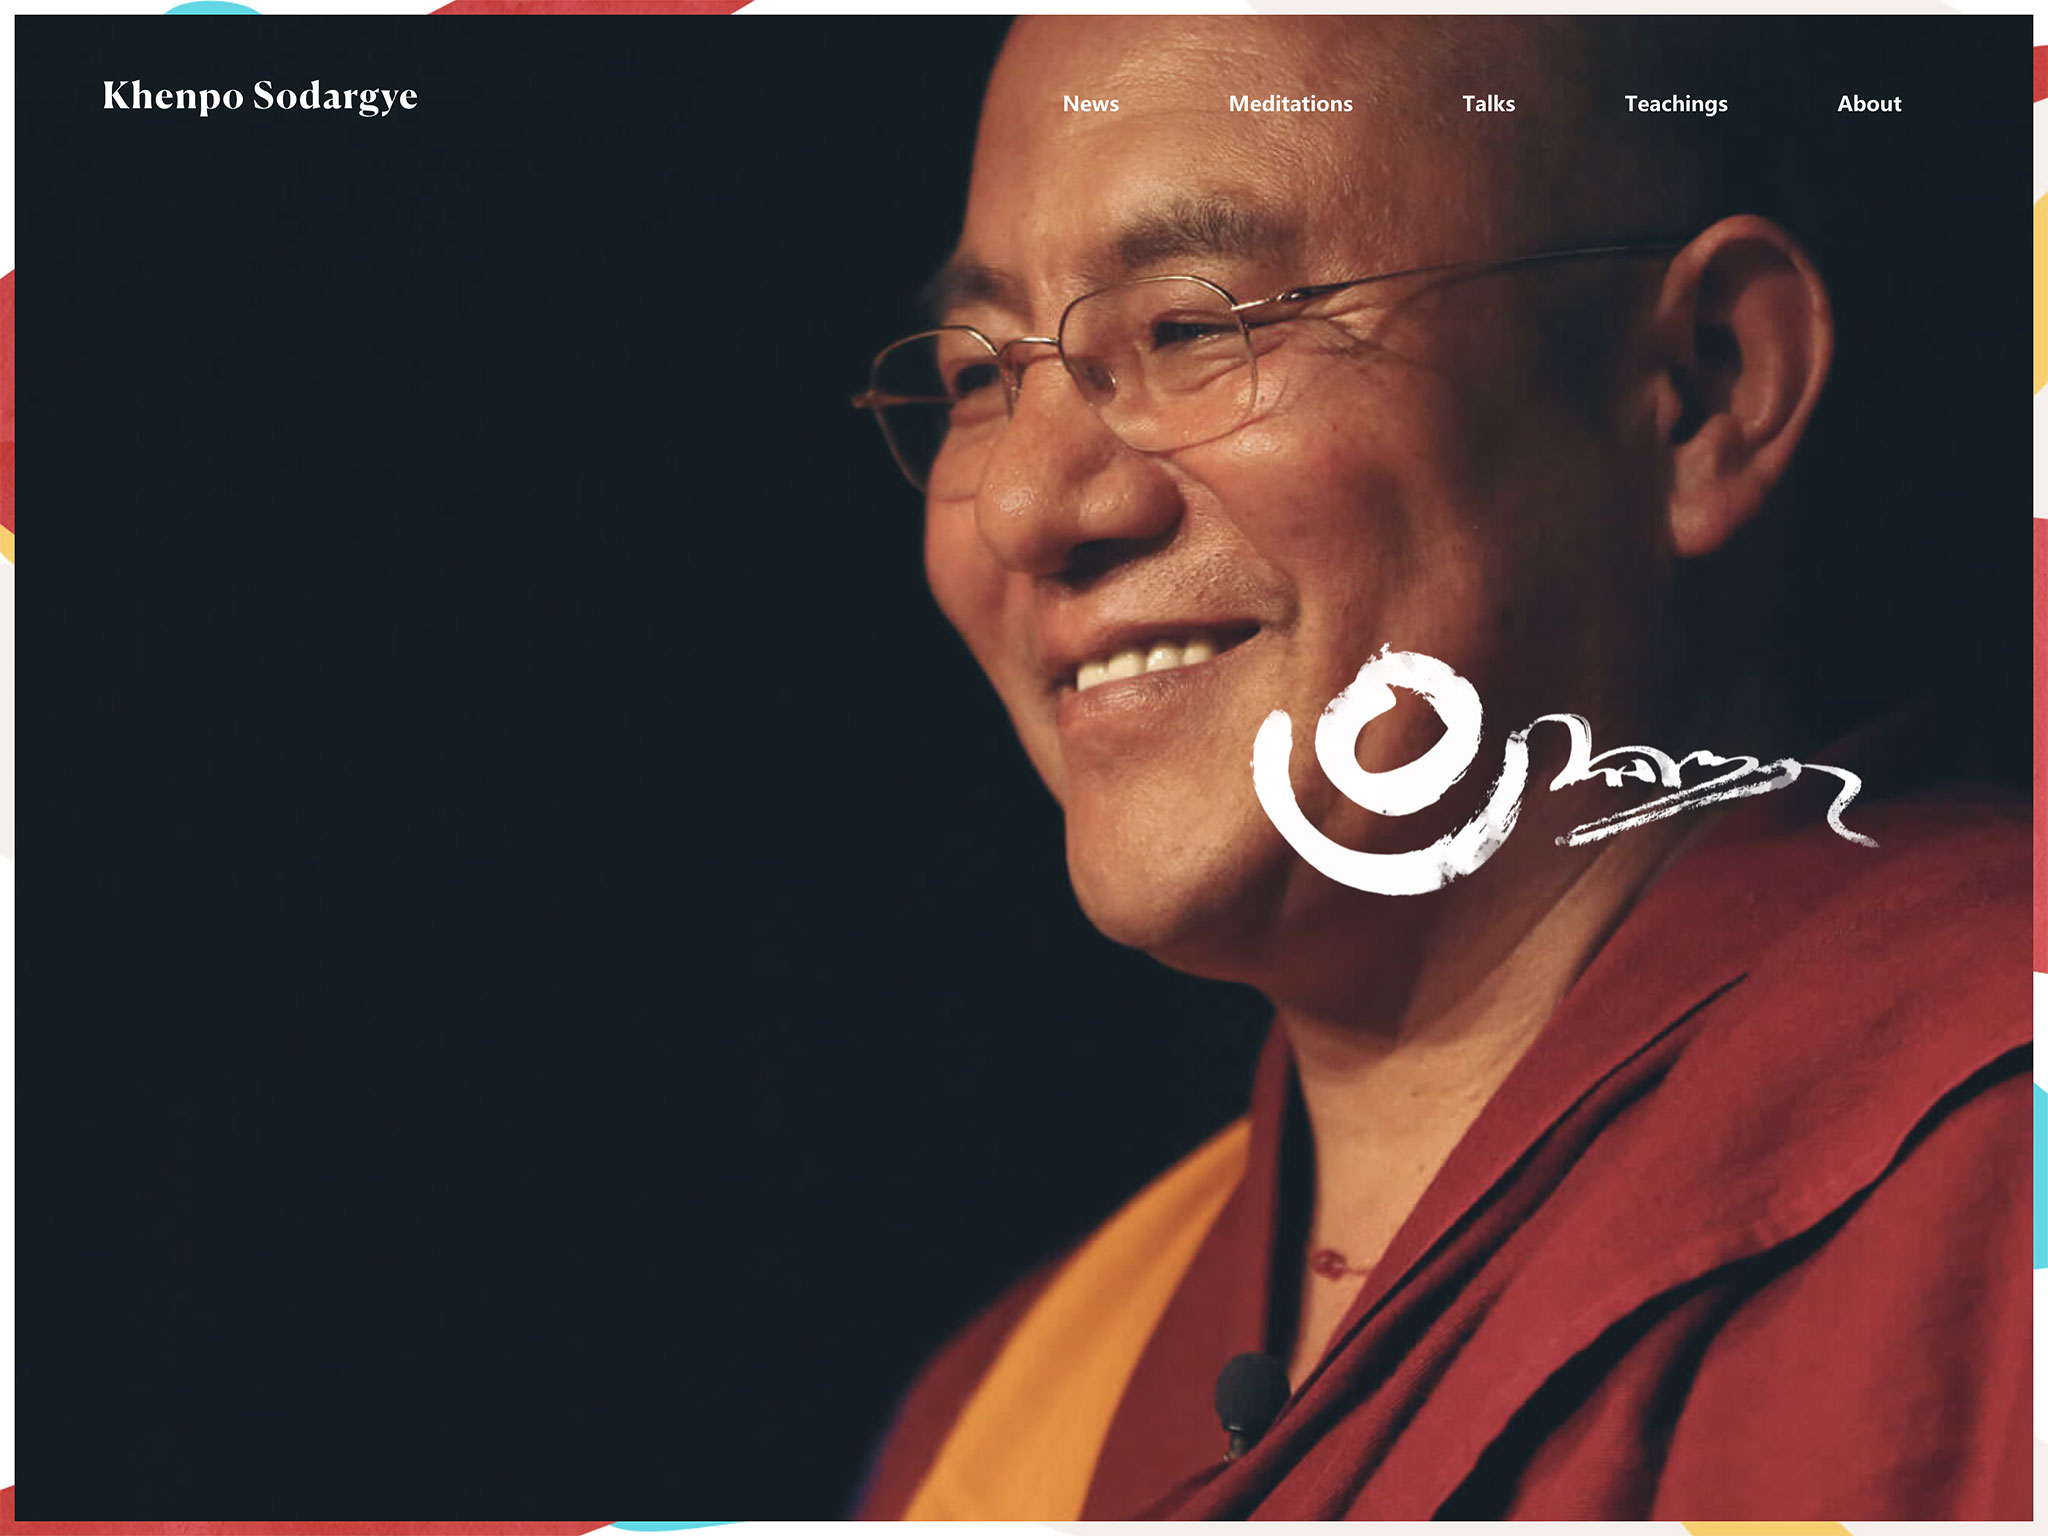 The Official Website of Khenpo Sodargye Rinpoche –